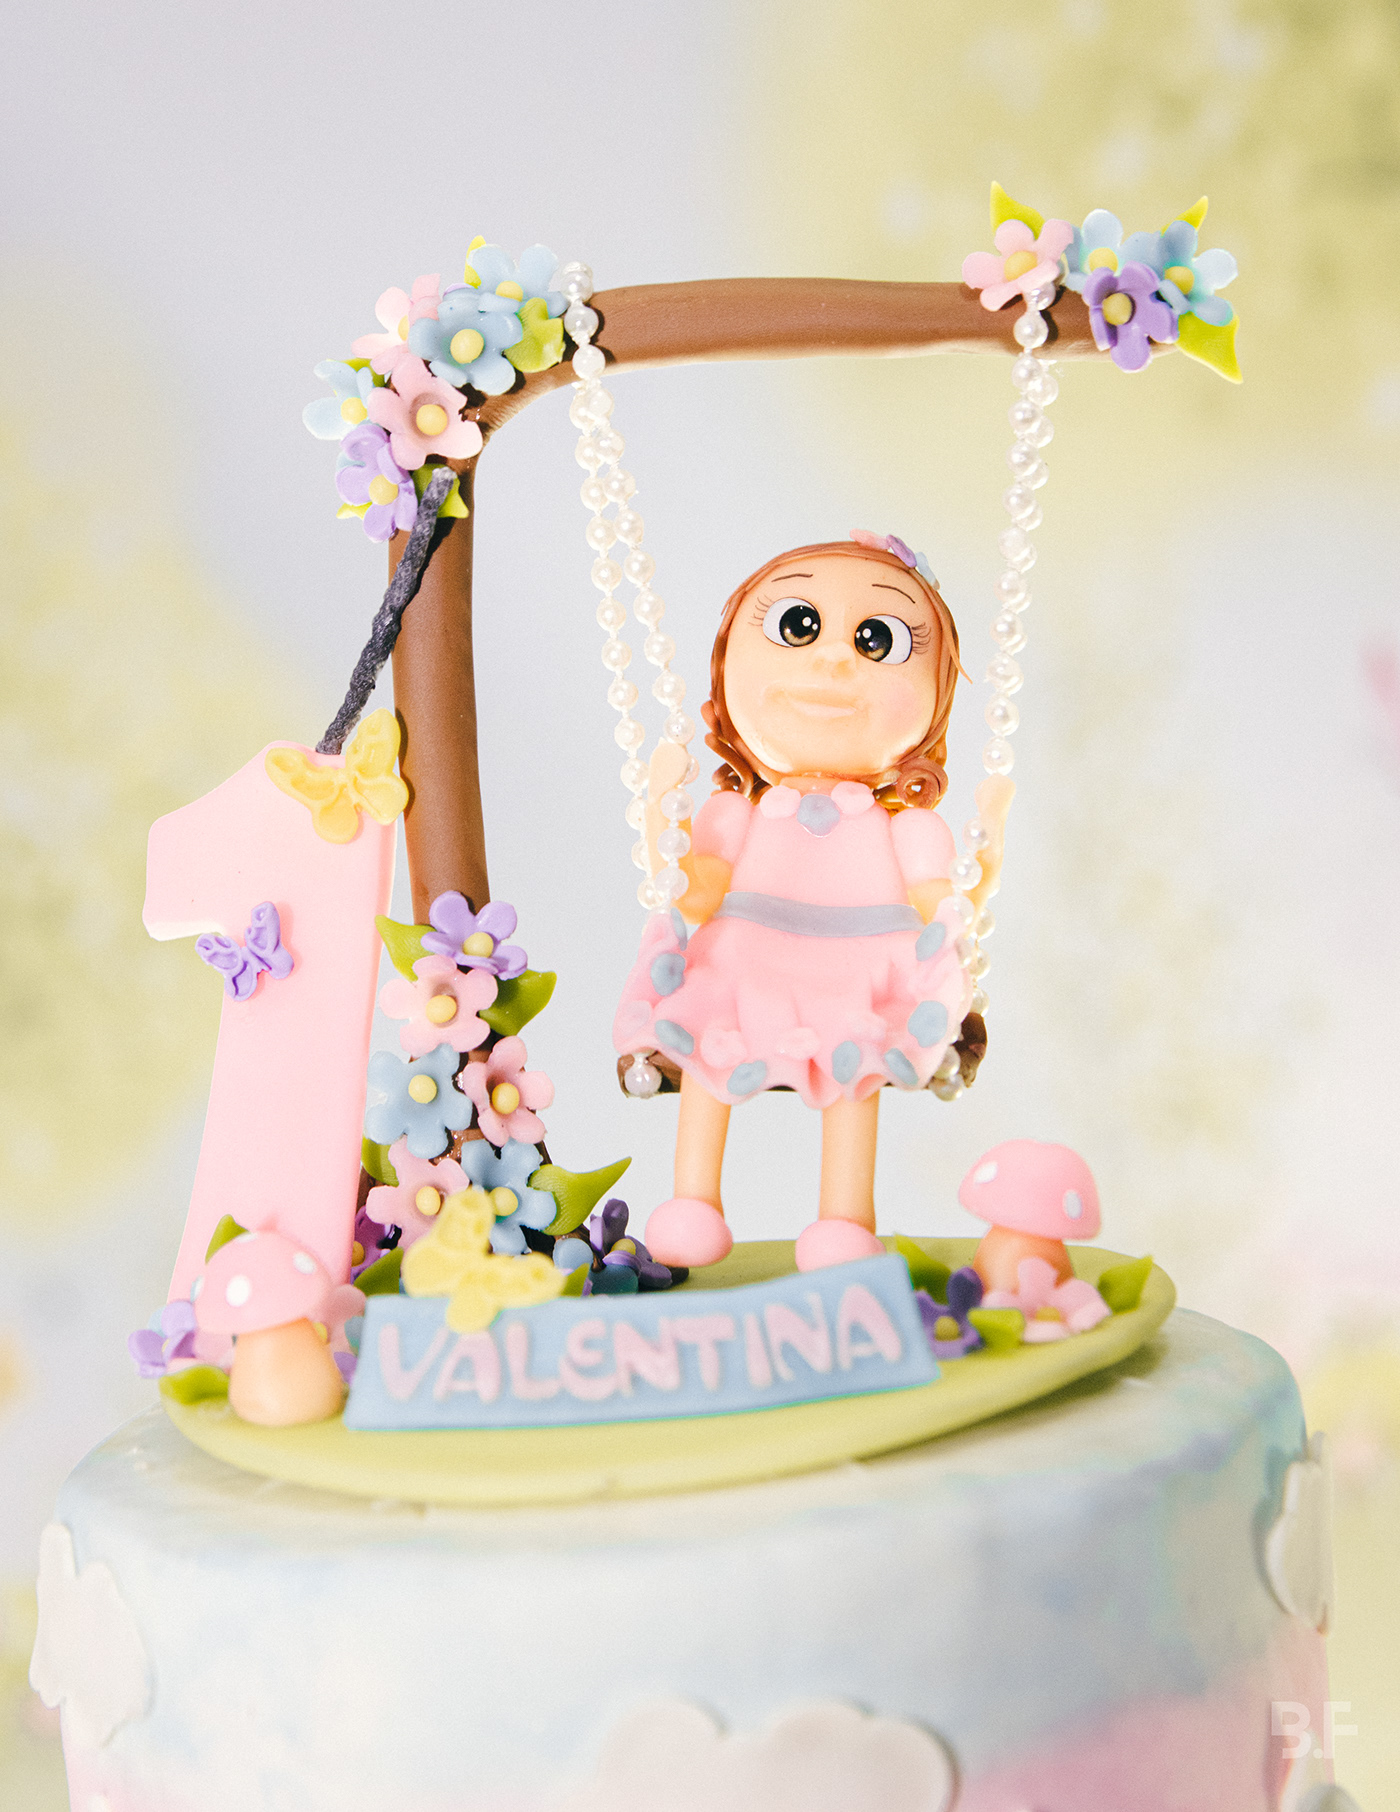 Image may contain: birthday cake, cake and wedding cake